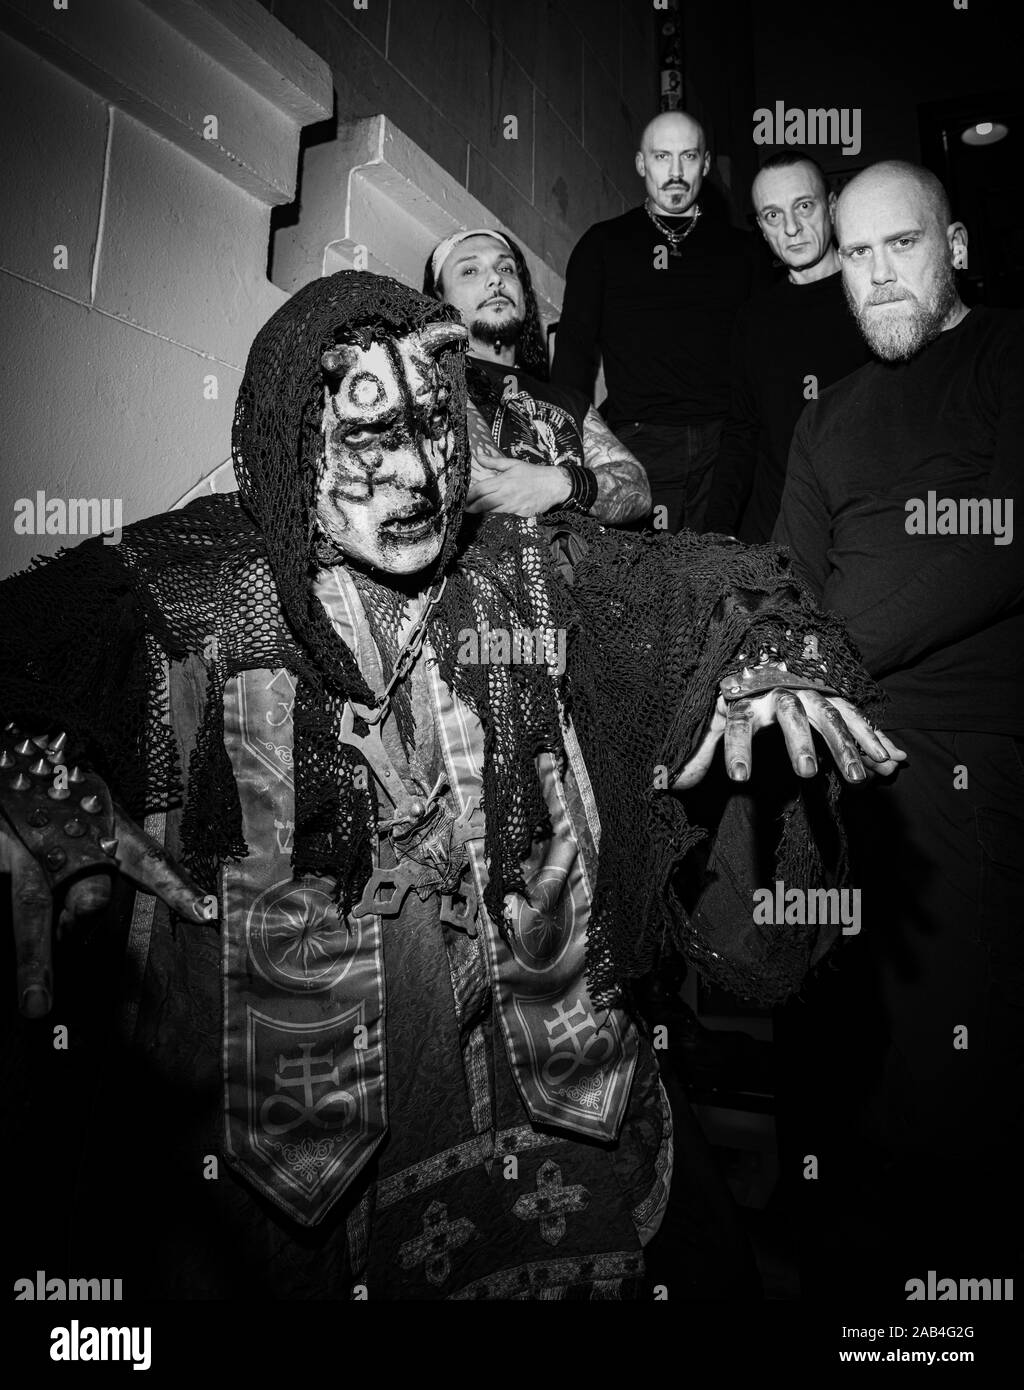 Copenhagen, Denmark. 24th, November 2019. The Norwegian black metal band Mayhem is portrayed backstage before a live concert at Pumpehuset in Copenhagen. (Photo credit: Gonzales Photo - Nikolaj Bransholm). Stock Photo